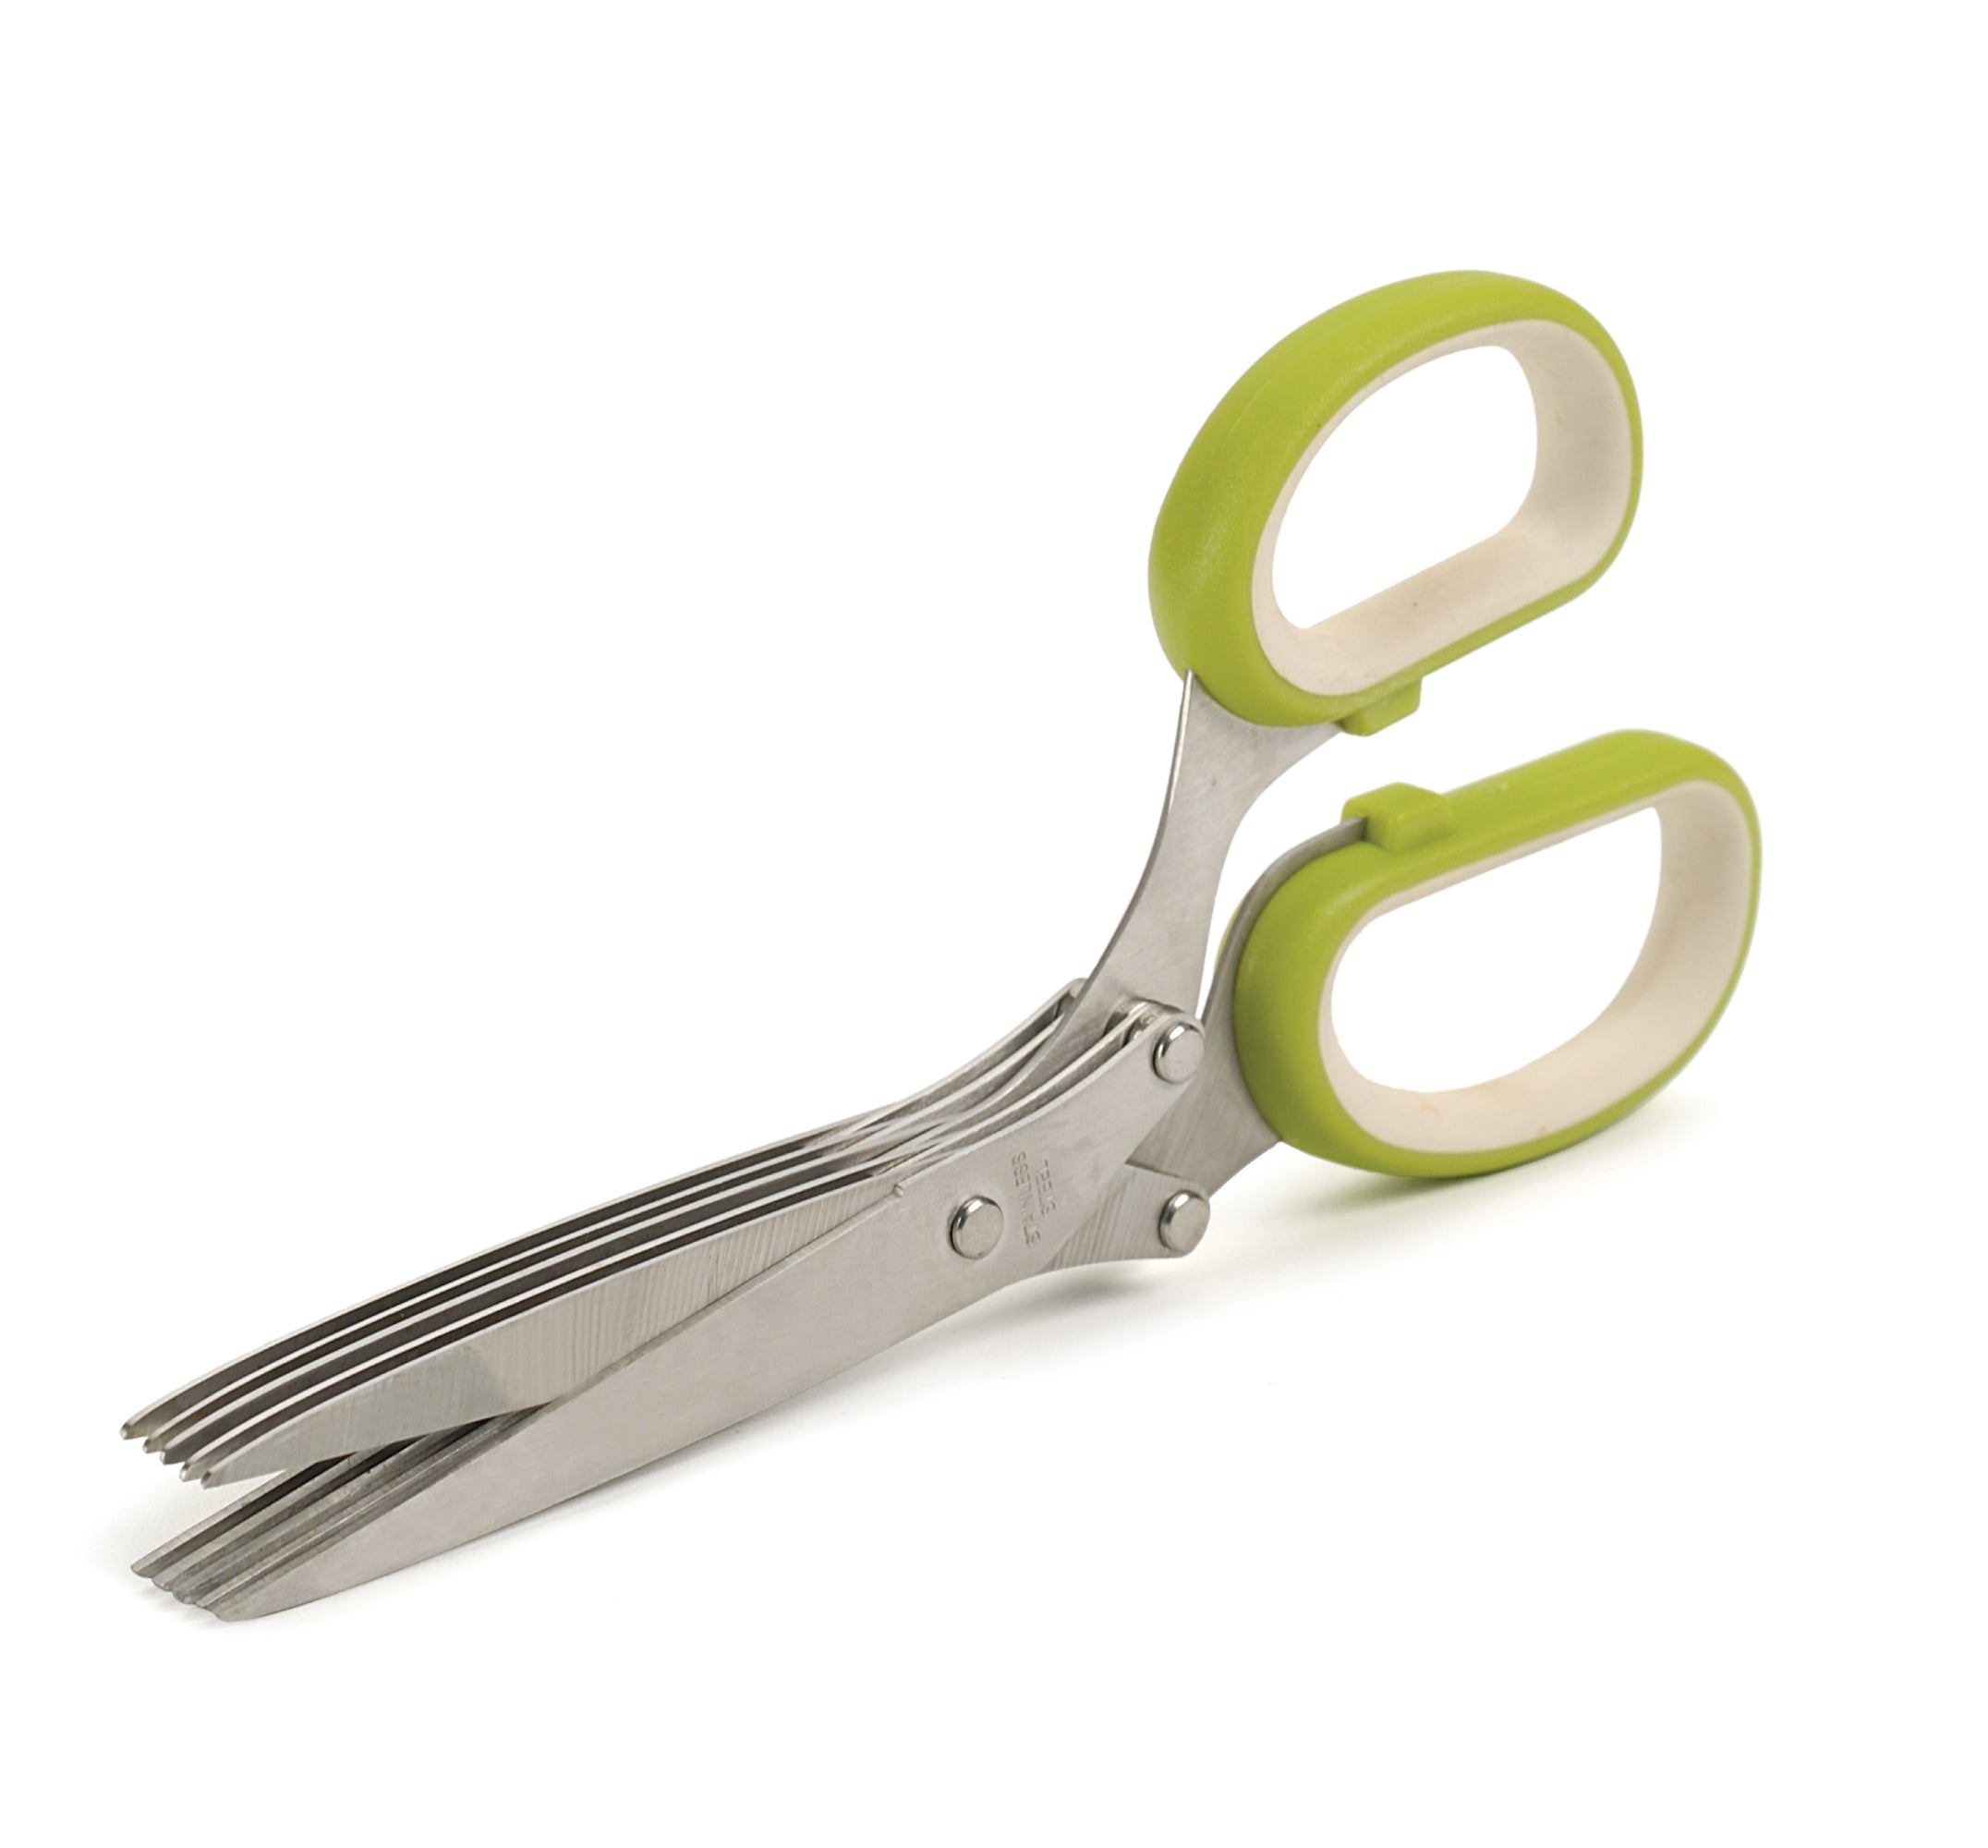 Norpro All-Purpose Scissors